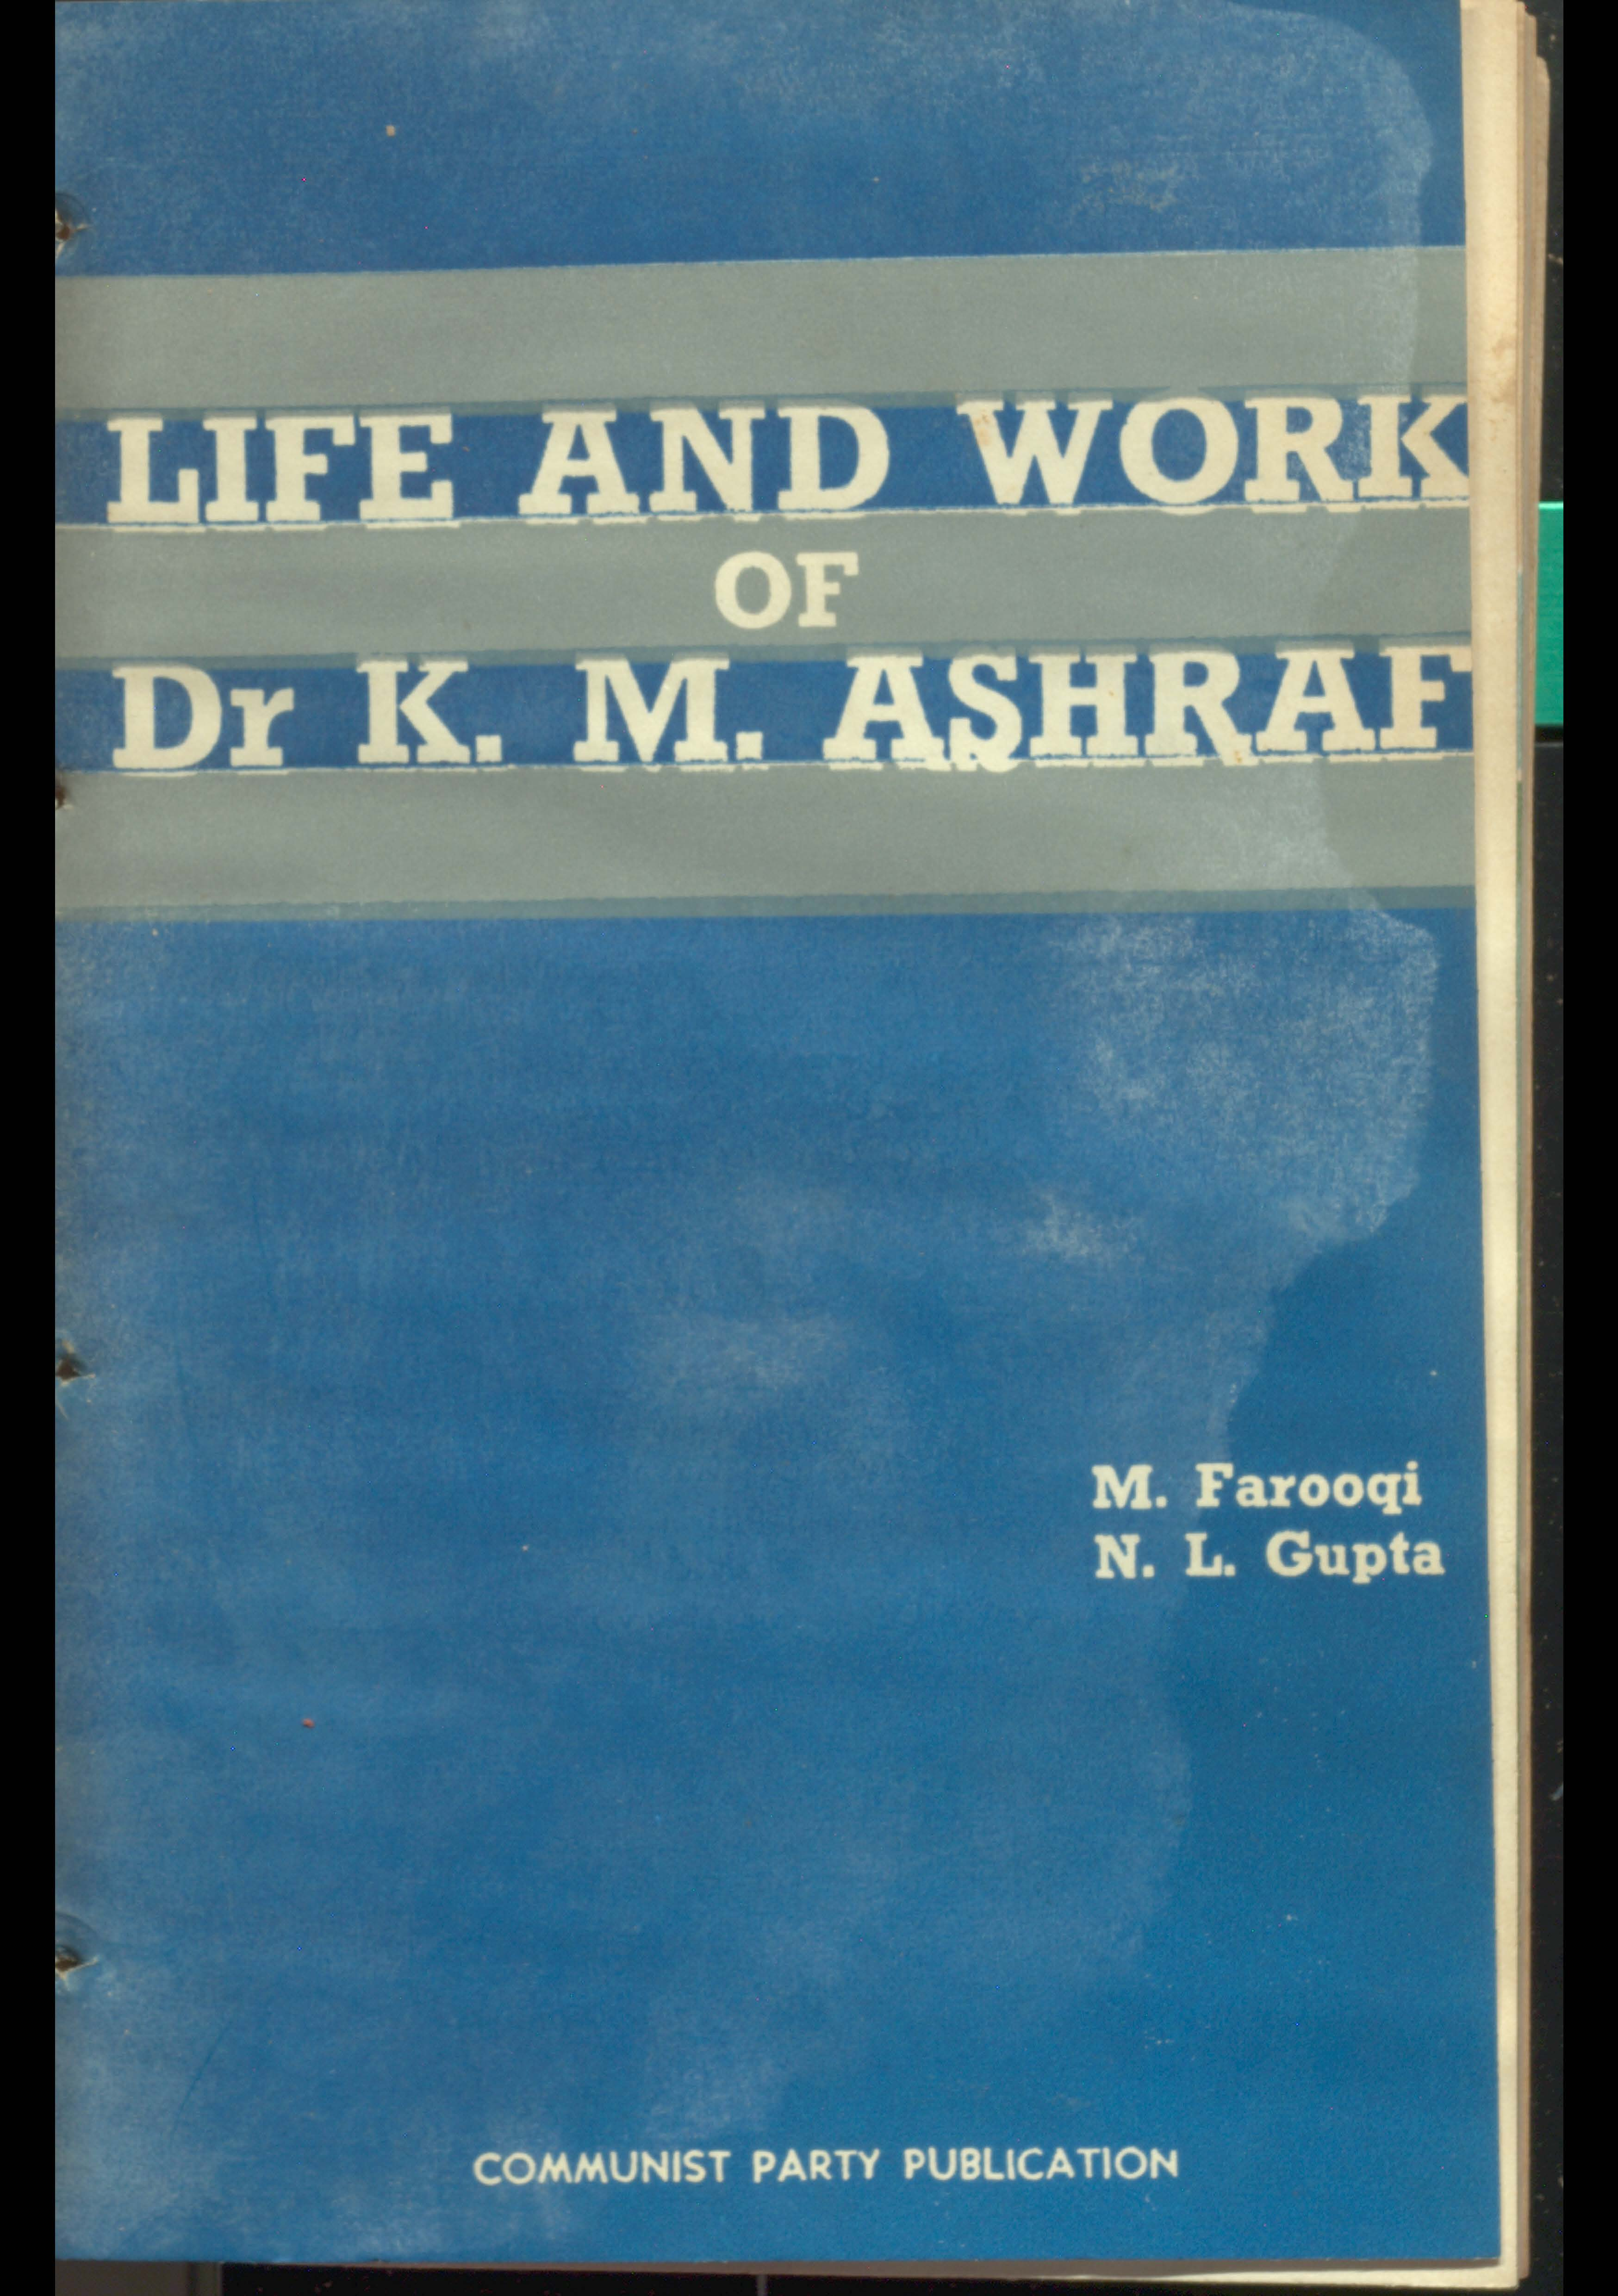 LIFE and work of DR.K.M.MASHRAF